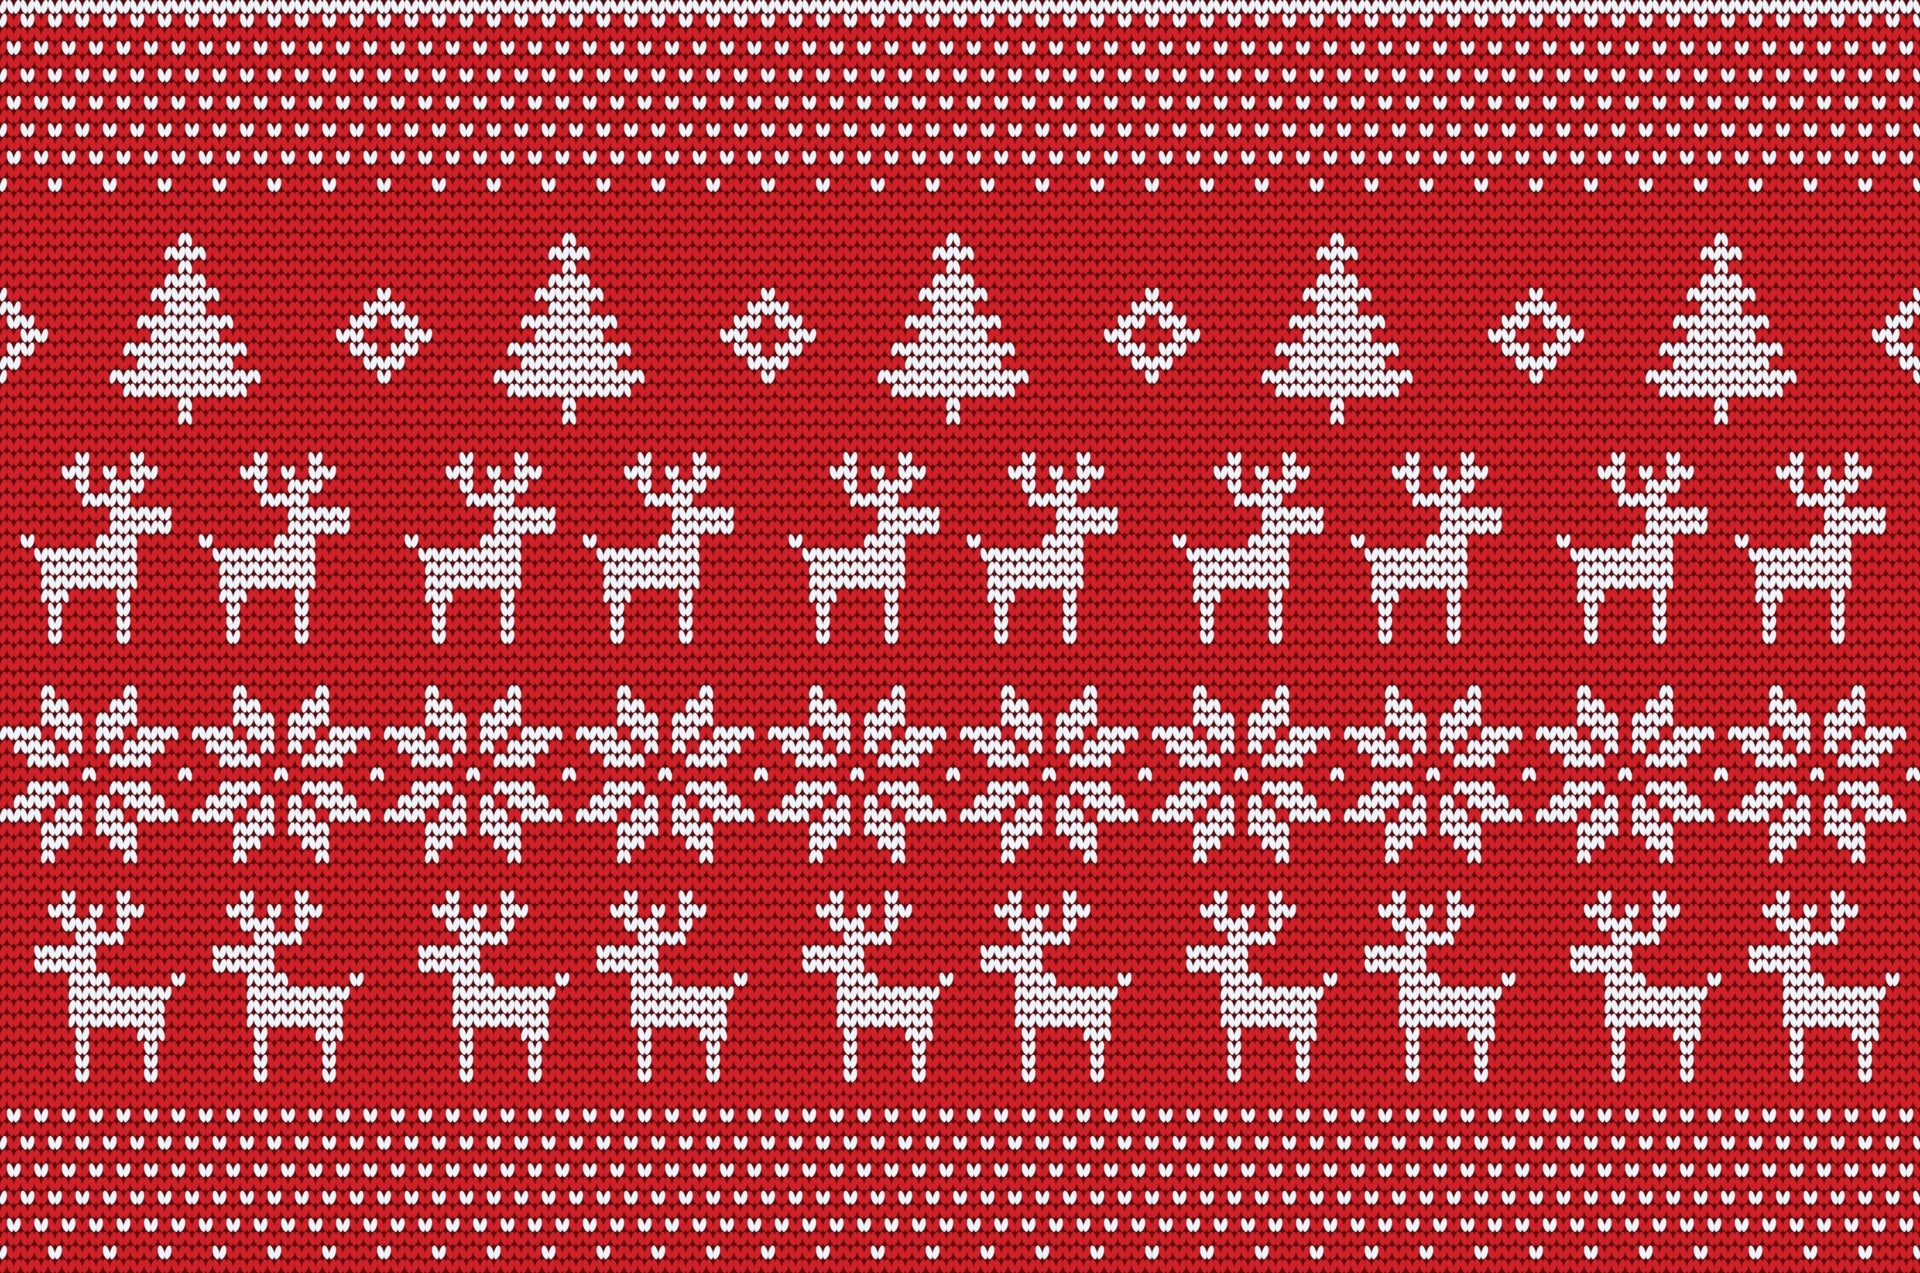 Free Printable Christmas Knitting Patterns_51325